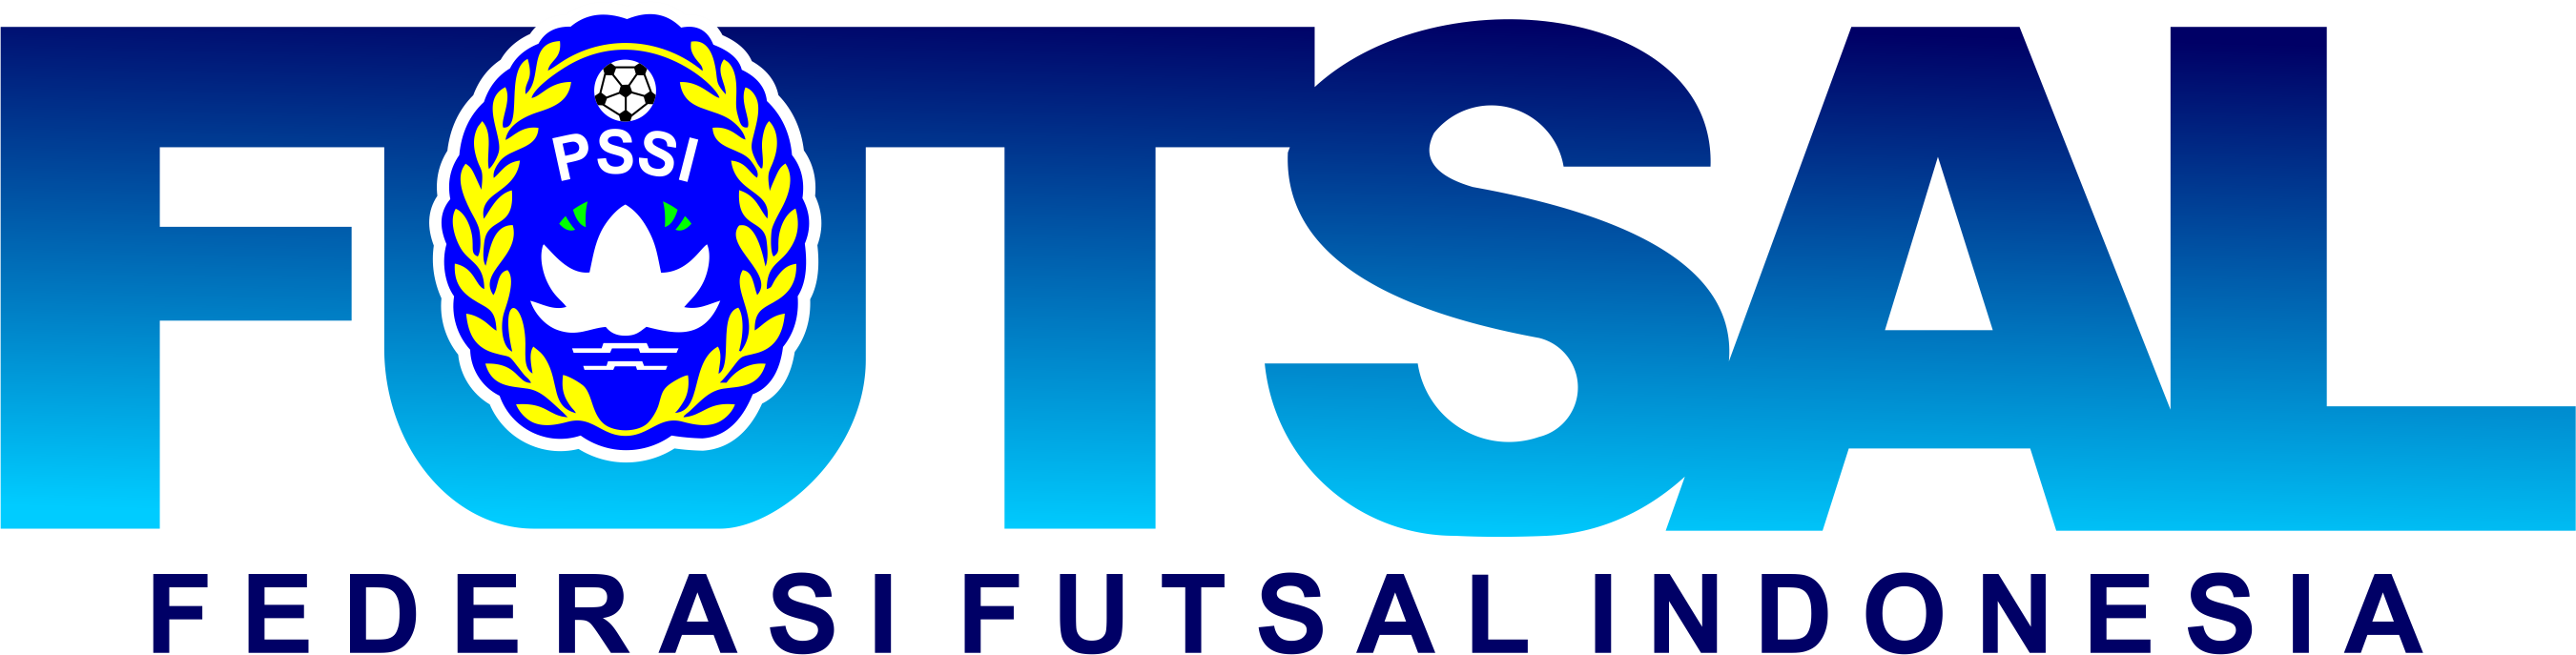 Logo Futsal FFI Vector dan HD - Mister Adli - Desain Grafis